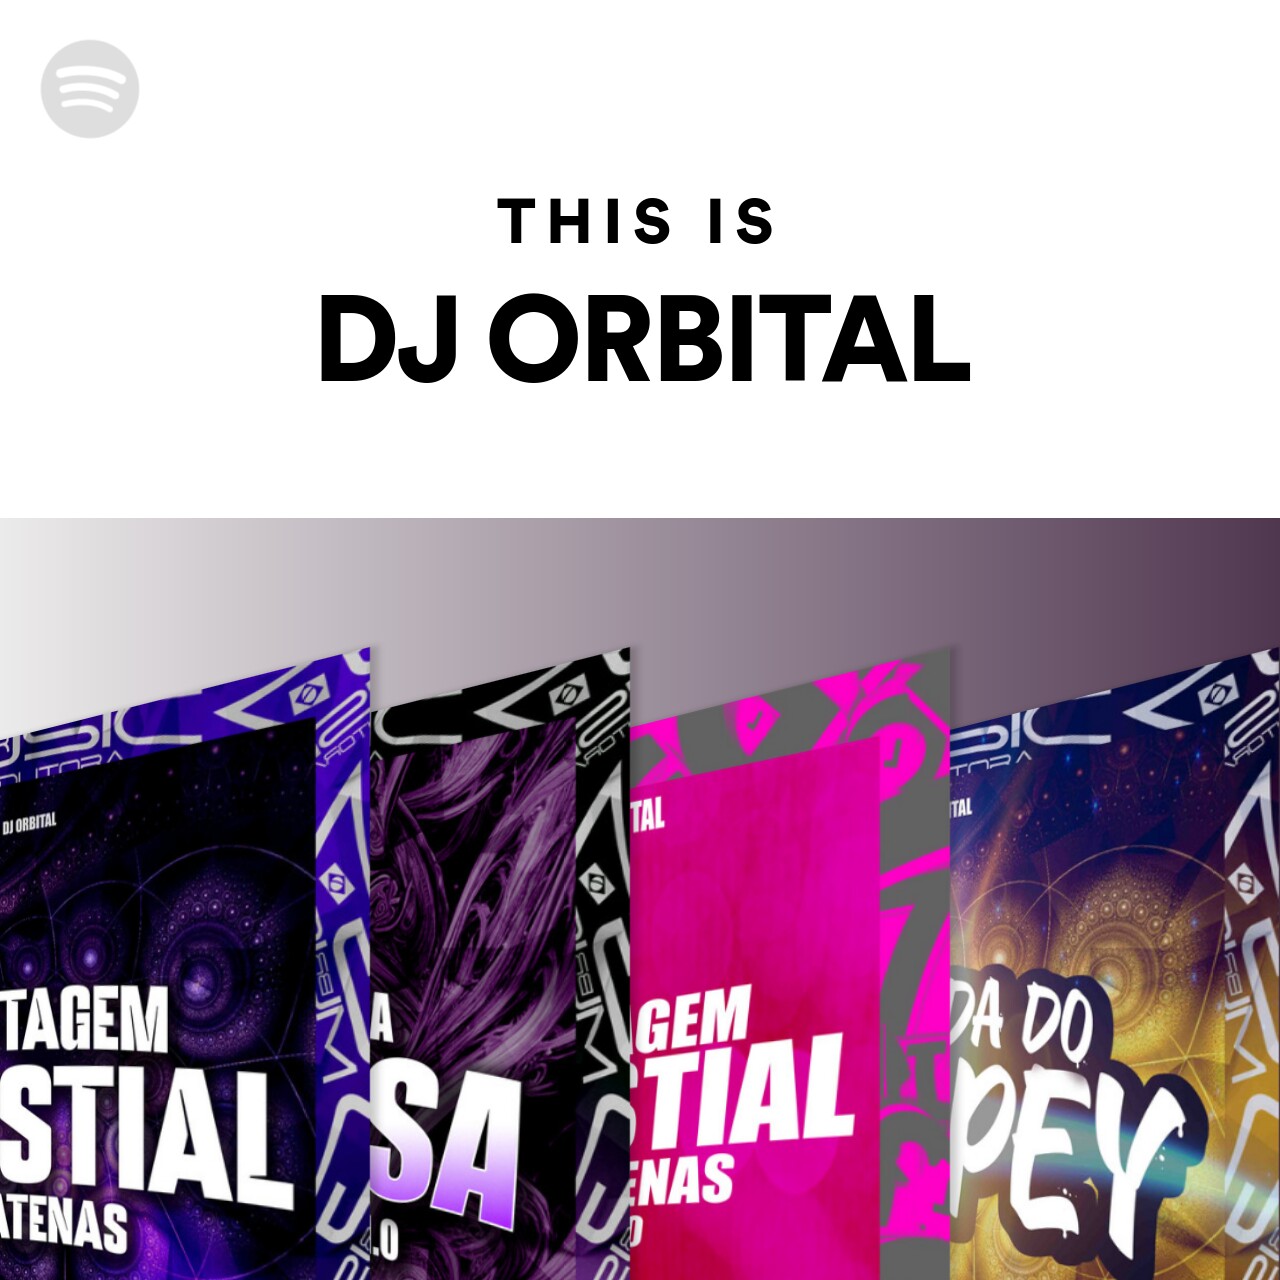 This Is DJ ORBITAL